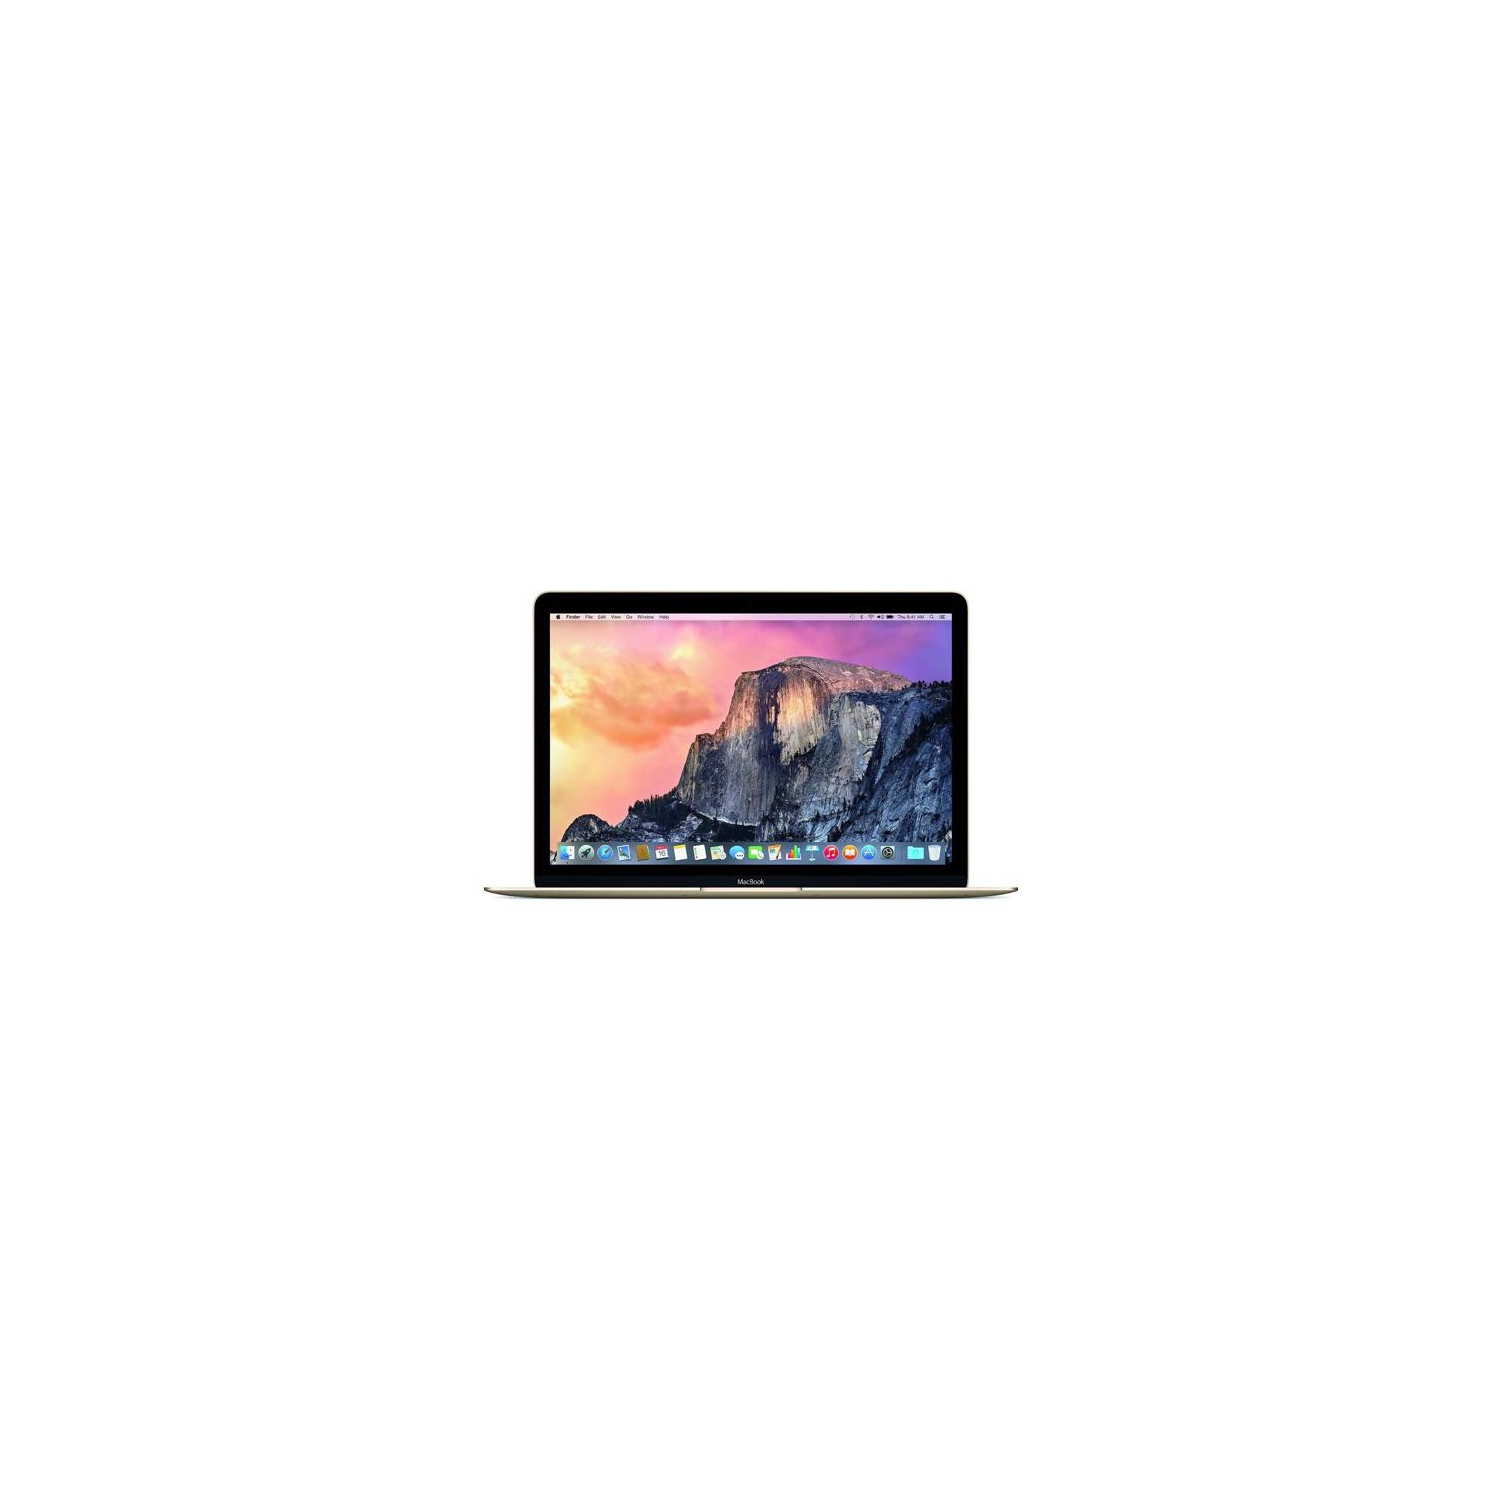 Refurbished (Excellent) - Apple Macbook 12.0" - Intel Core M-5Y51 / 8GB RAM / 512GB SSD / OS X High Sierra - Gold - 5K4N2LL/A (2015) - Certified Refurbished